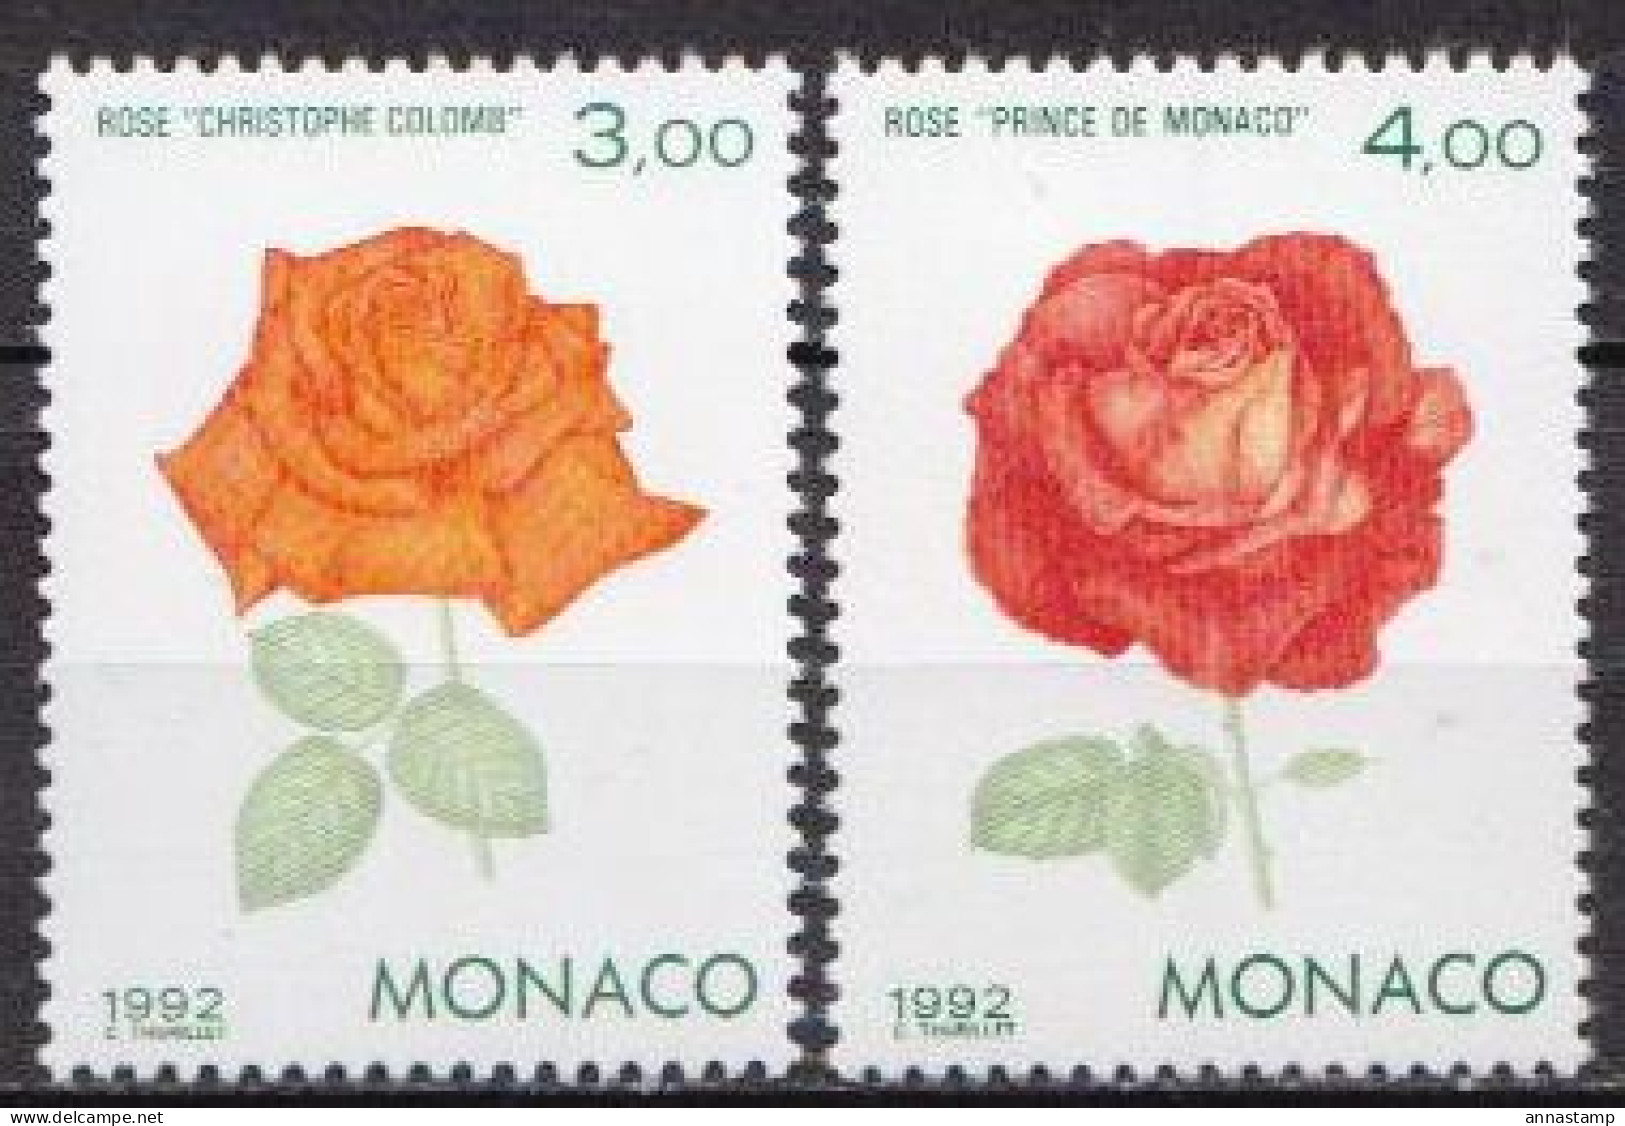 Monaco MNH Set - Roses